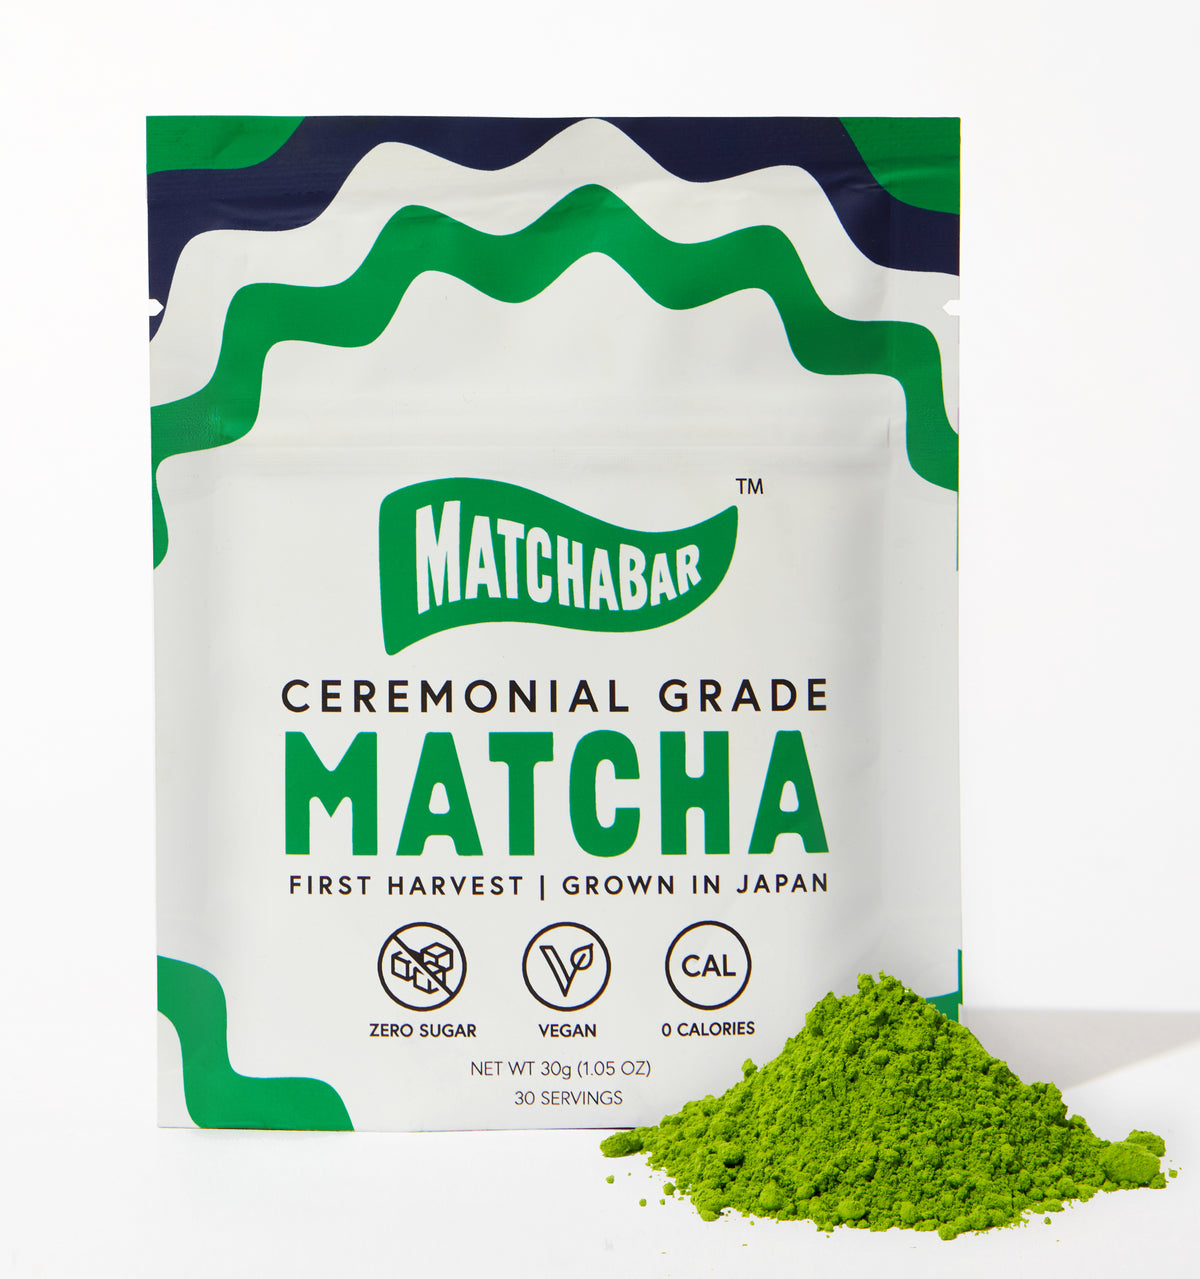 Powerful Health Benefits of Ceremonial Grade Matcha Powder